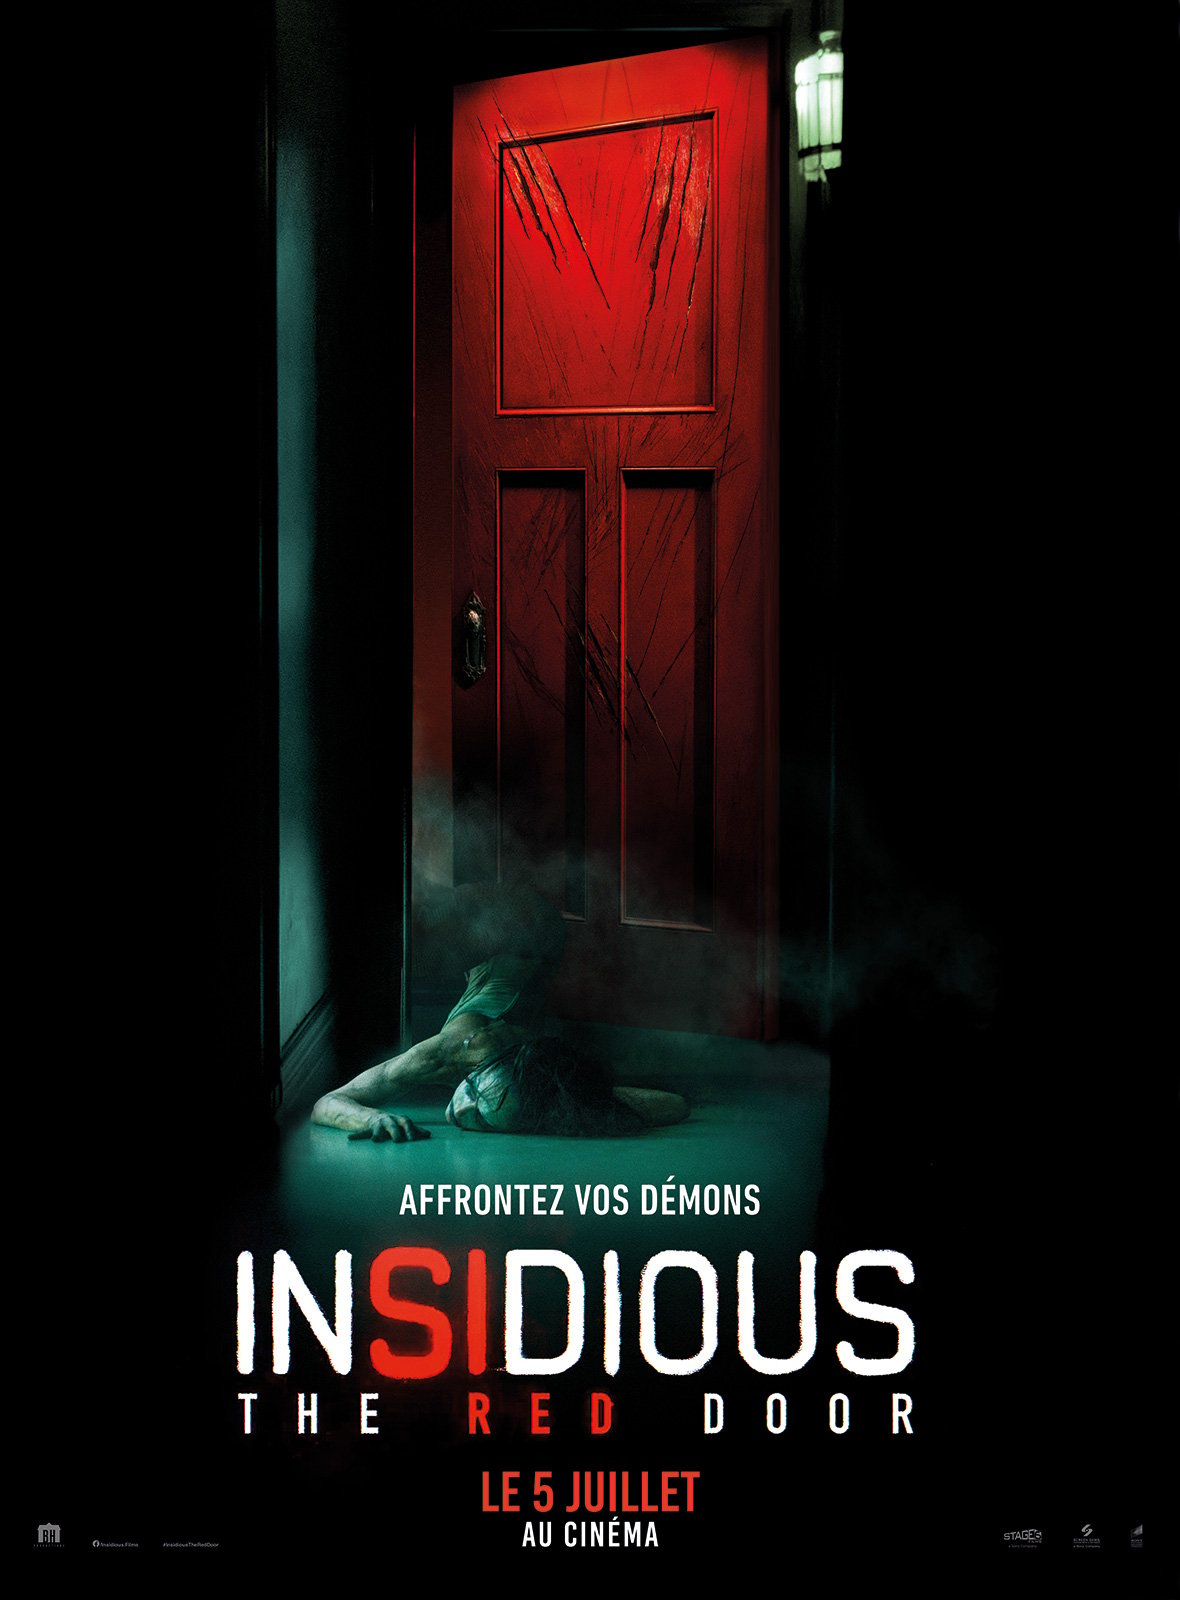 Insidious The Red Door Photos et affiches AlloCiné